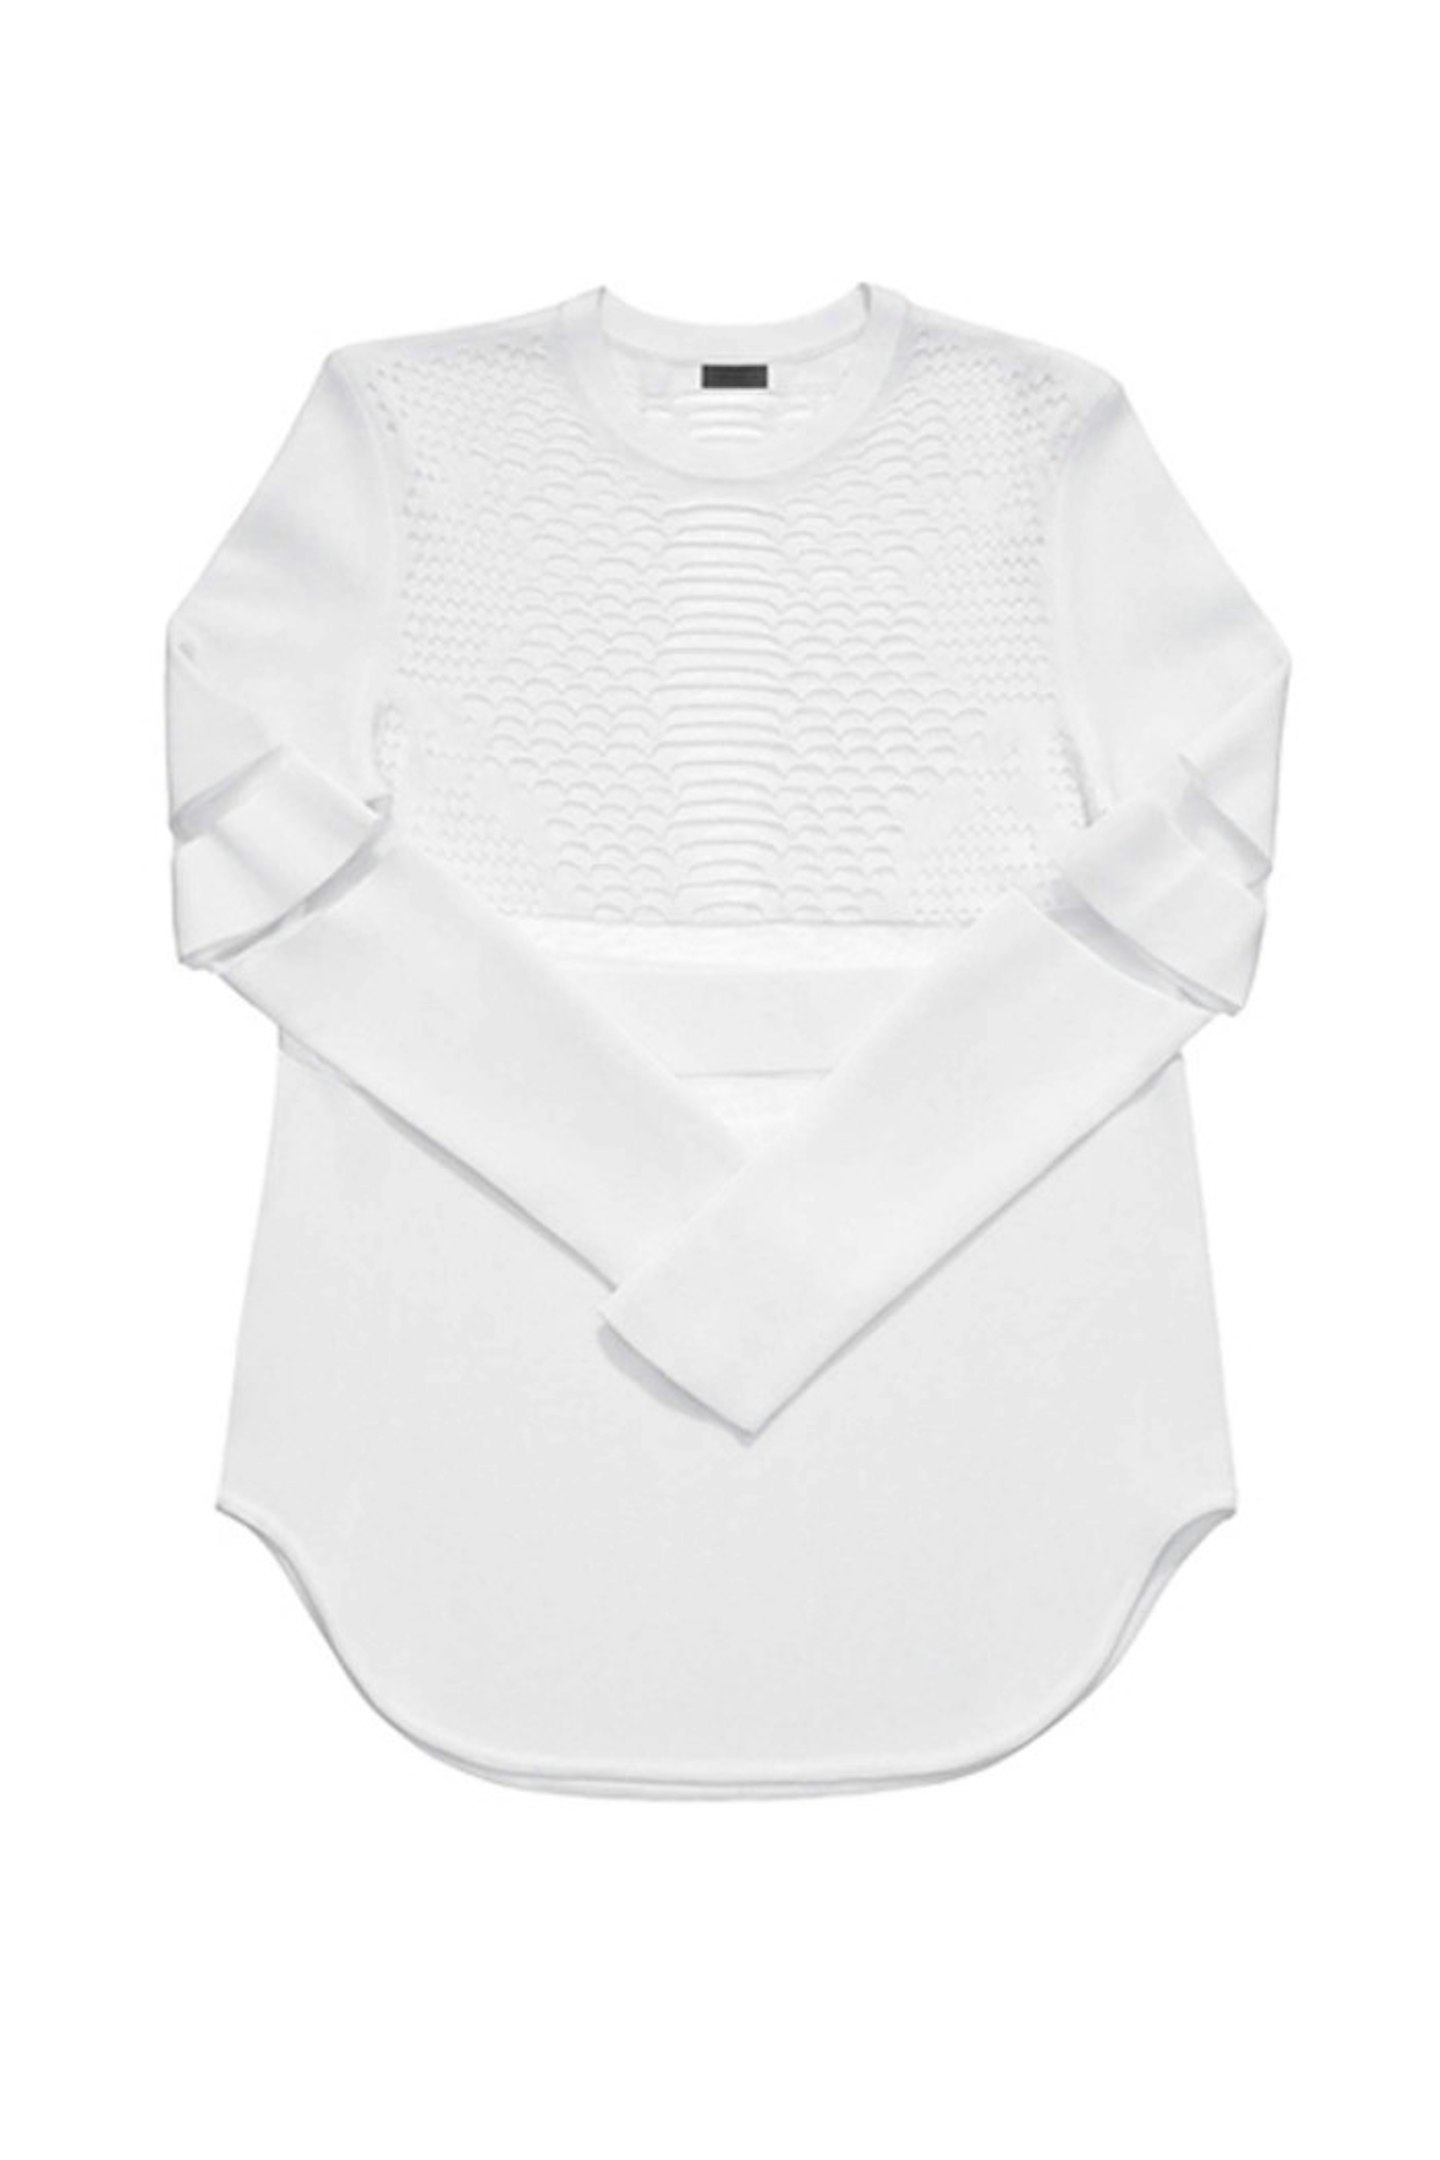 Long sleeved white mesh top £79.99 by Alexander Wang x H&M